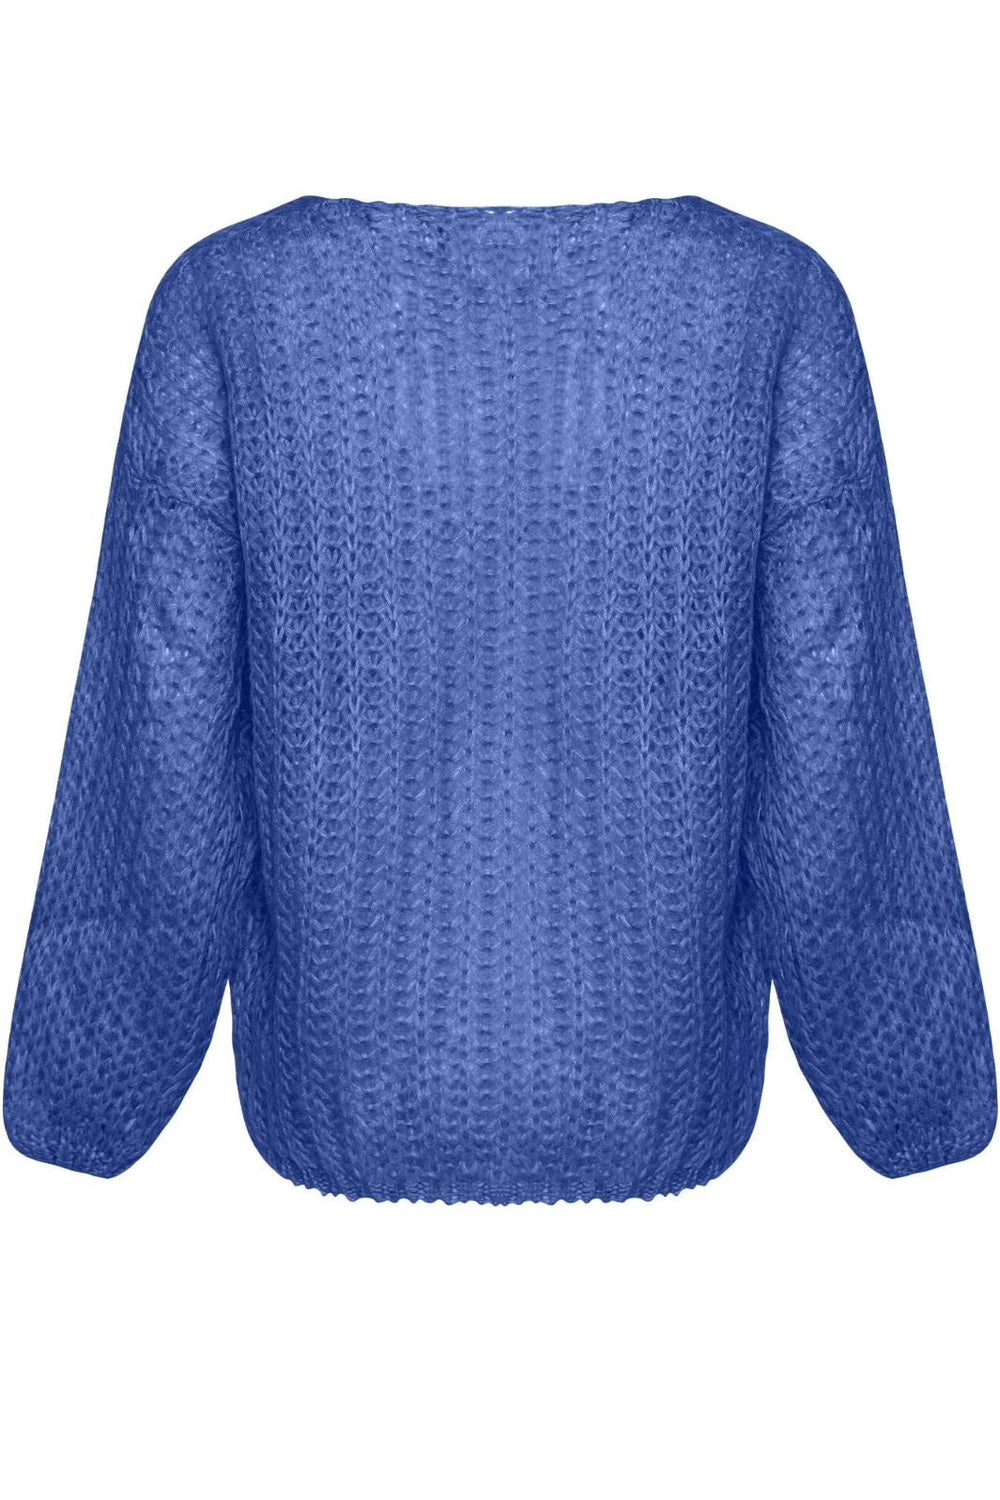 Noella - Joseph Knit Sweater - 535 Royal Blue Strikbluser 